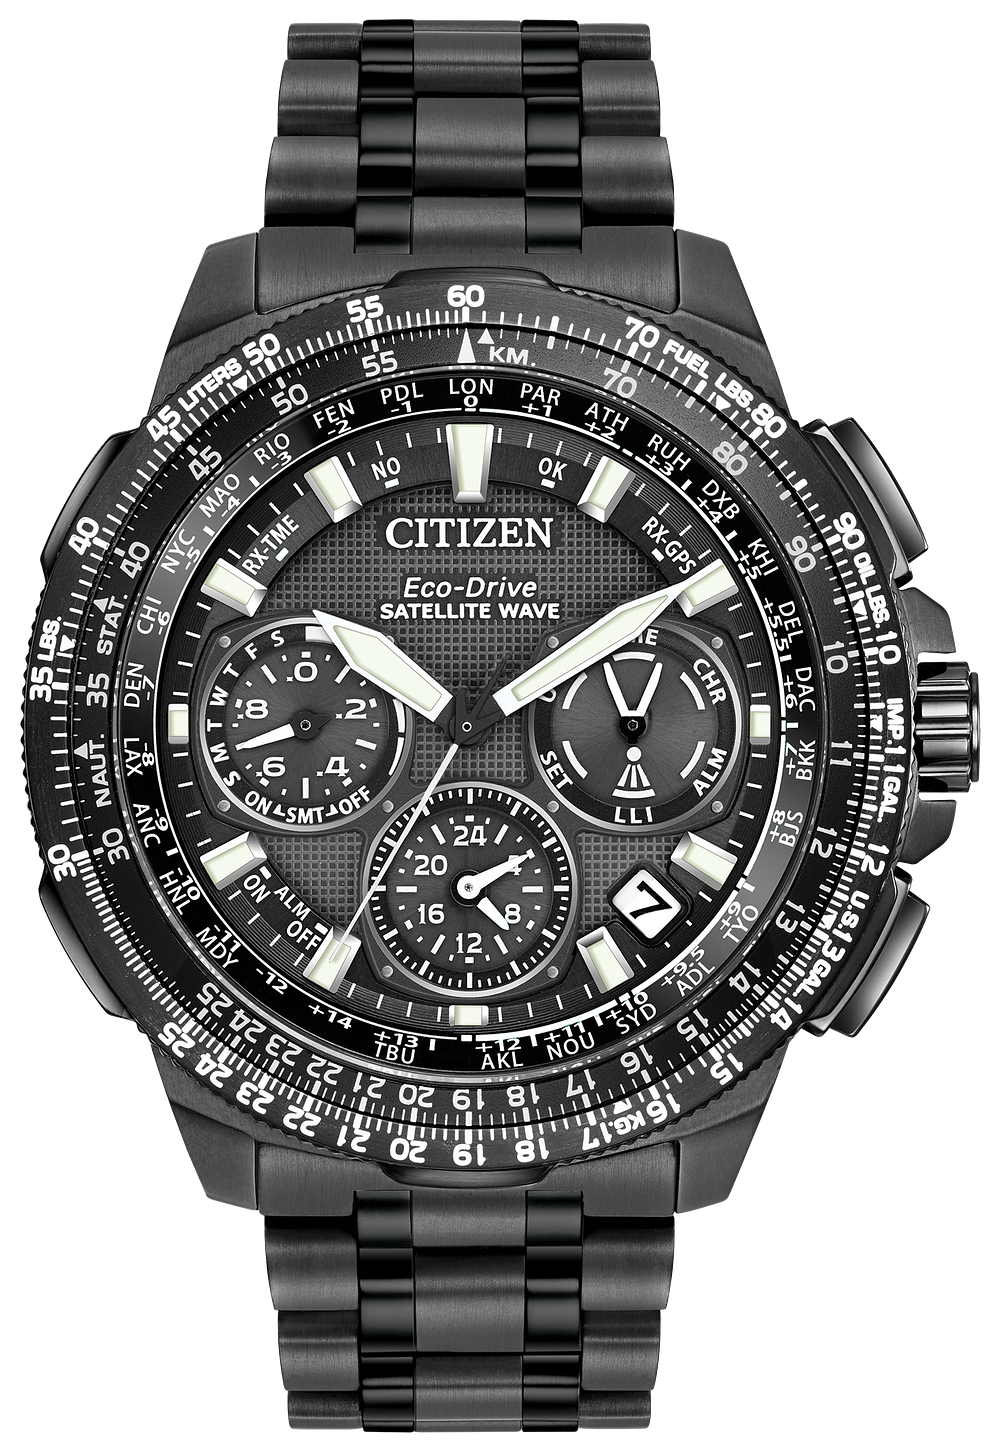 Satellite Wave F900 - Men's Eco-Drive Black Titanium Watch | Citizen